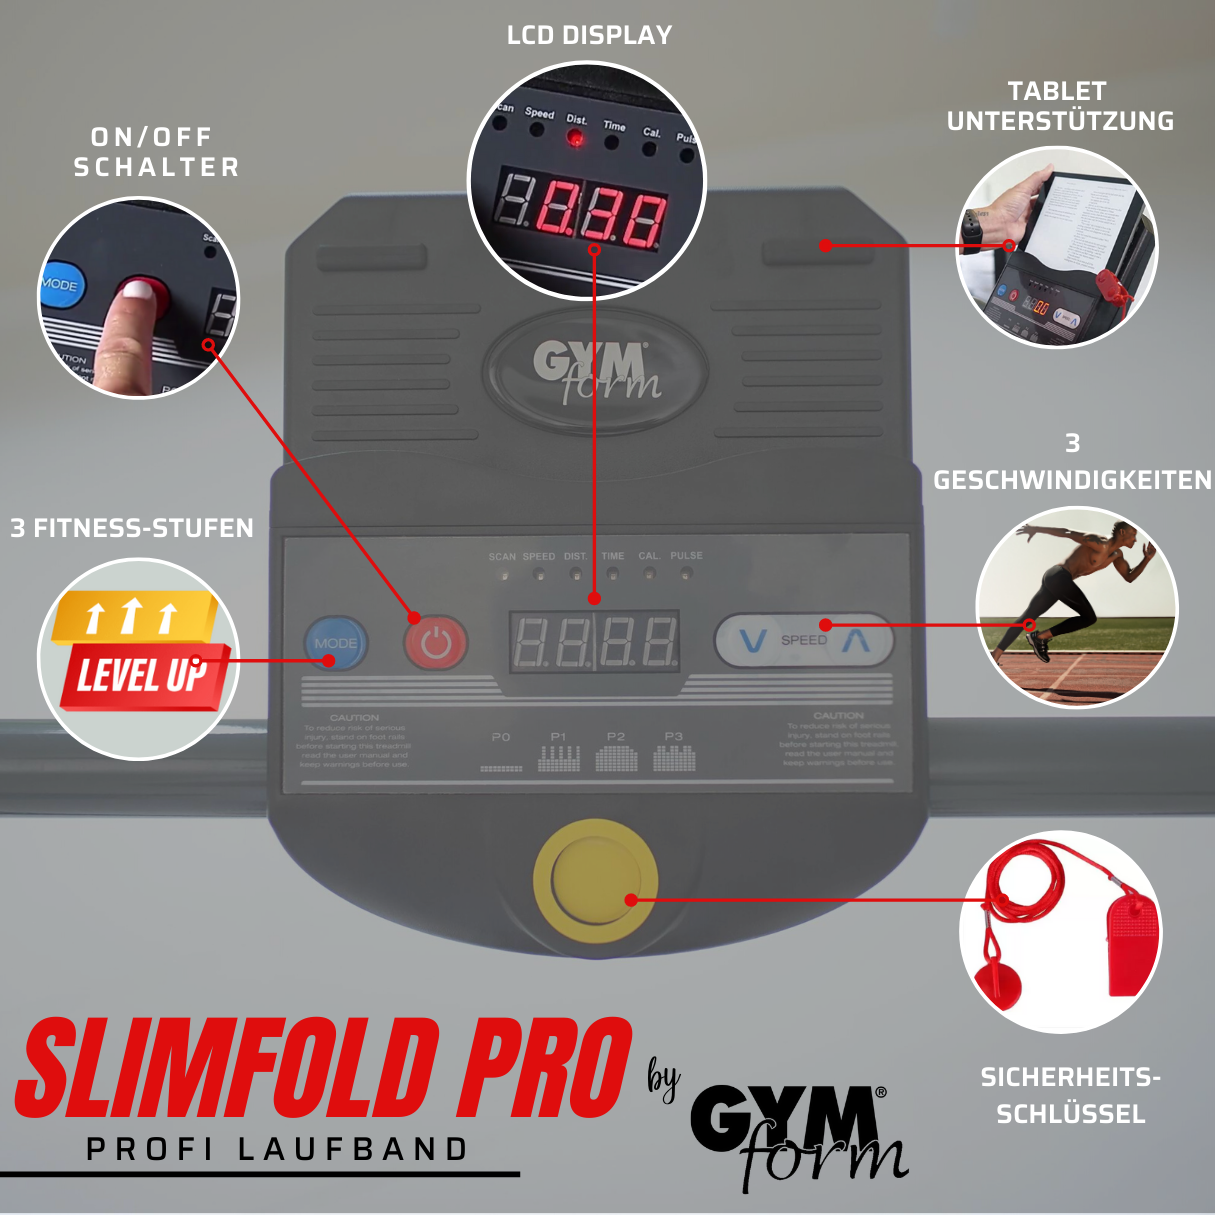 GYMFORM Slim Fold schwarz Laufband, Pro Treadmill